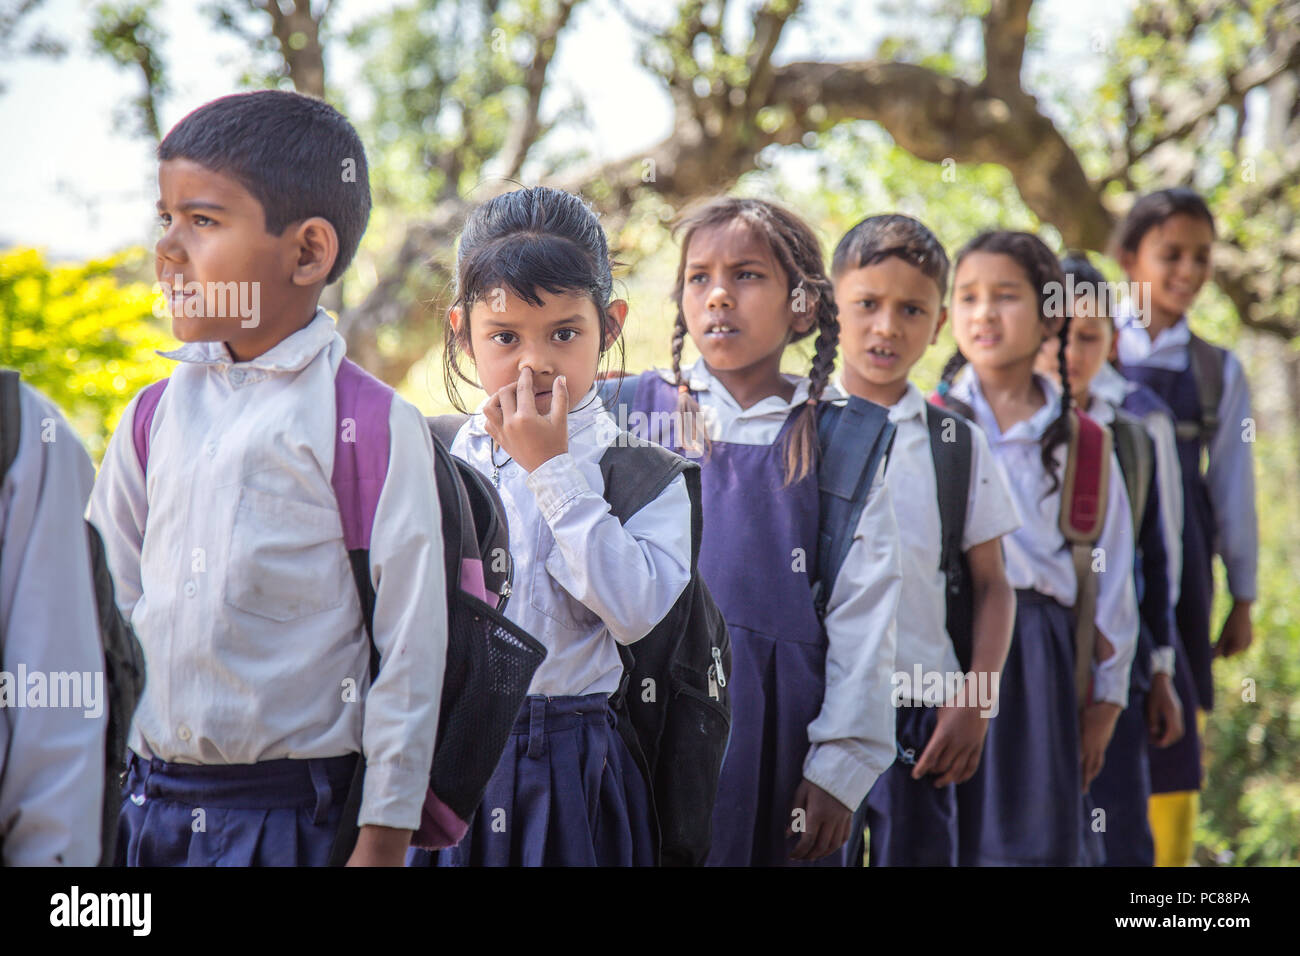 Village elementary school kids forming line for morning prayer. different age group children wearing school uniform. Stock Photo